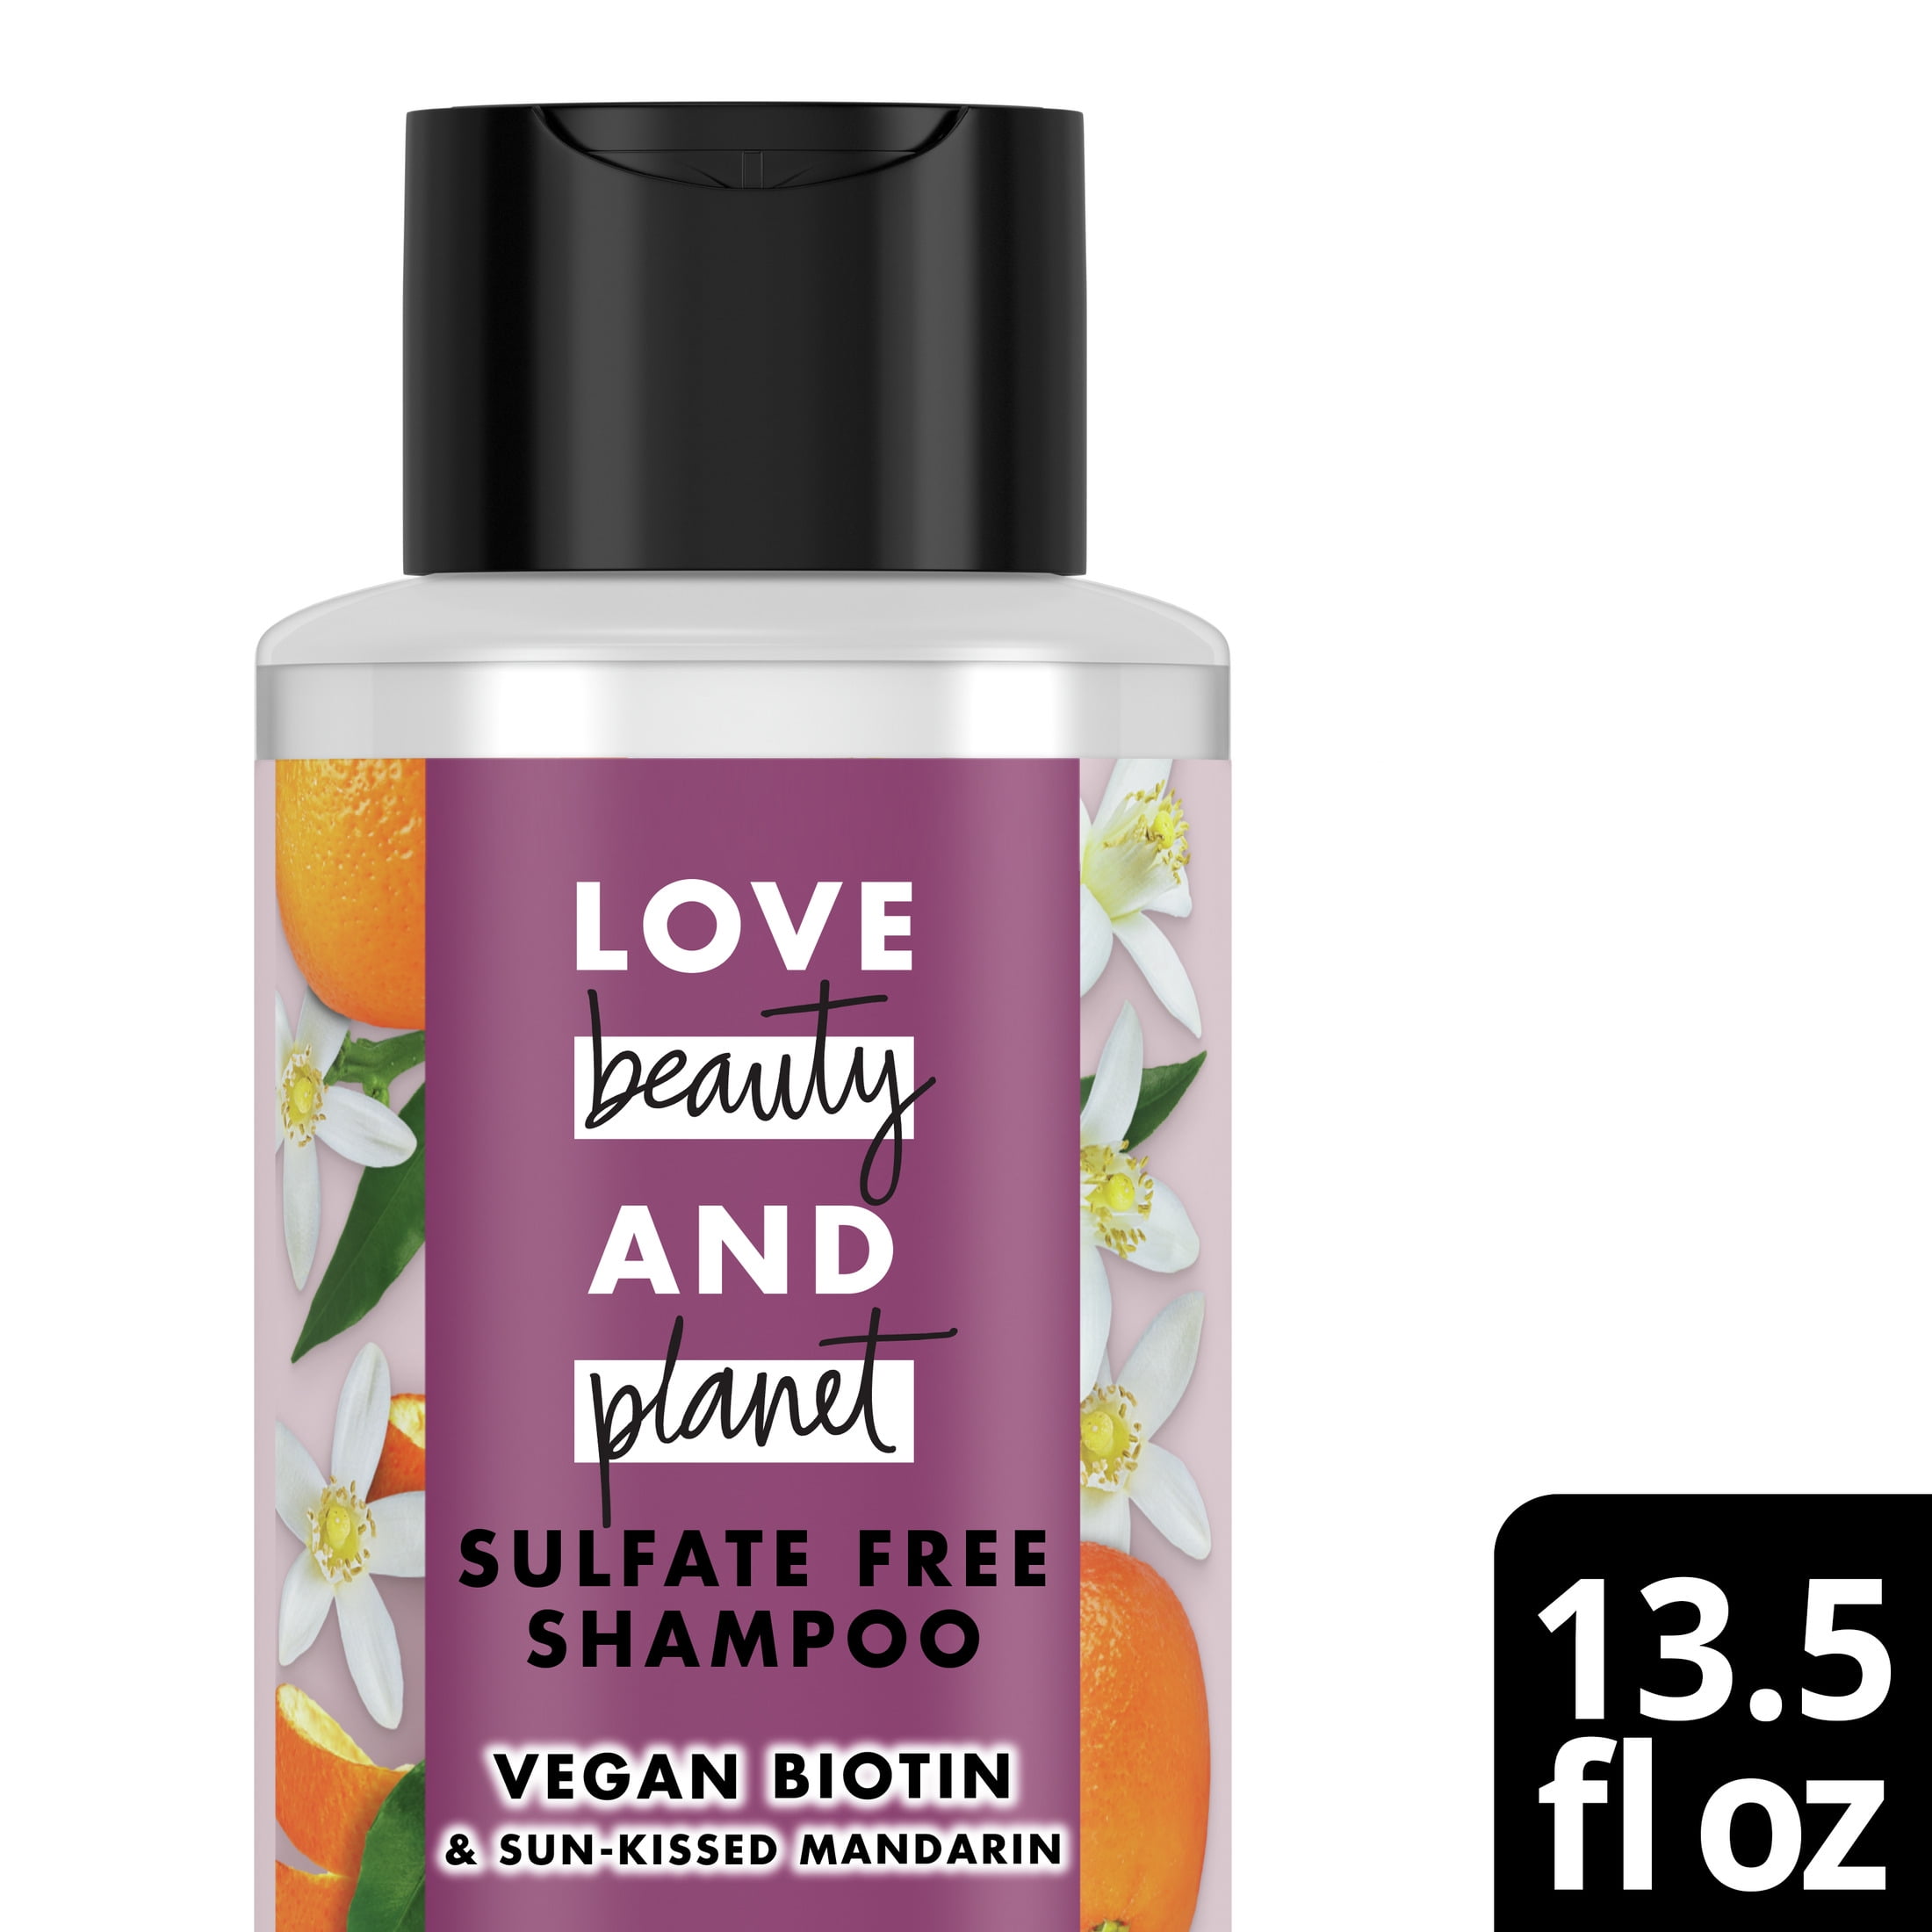 Love Beauty and Planet 5 in 1 Multi Benefits Nourishing Daily Shampoo with Biotin & Sun-Kissed Mandarin, 13.5 fl oz